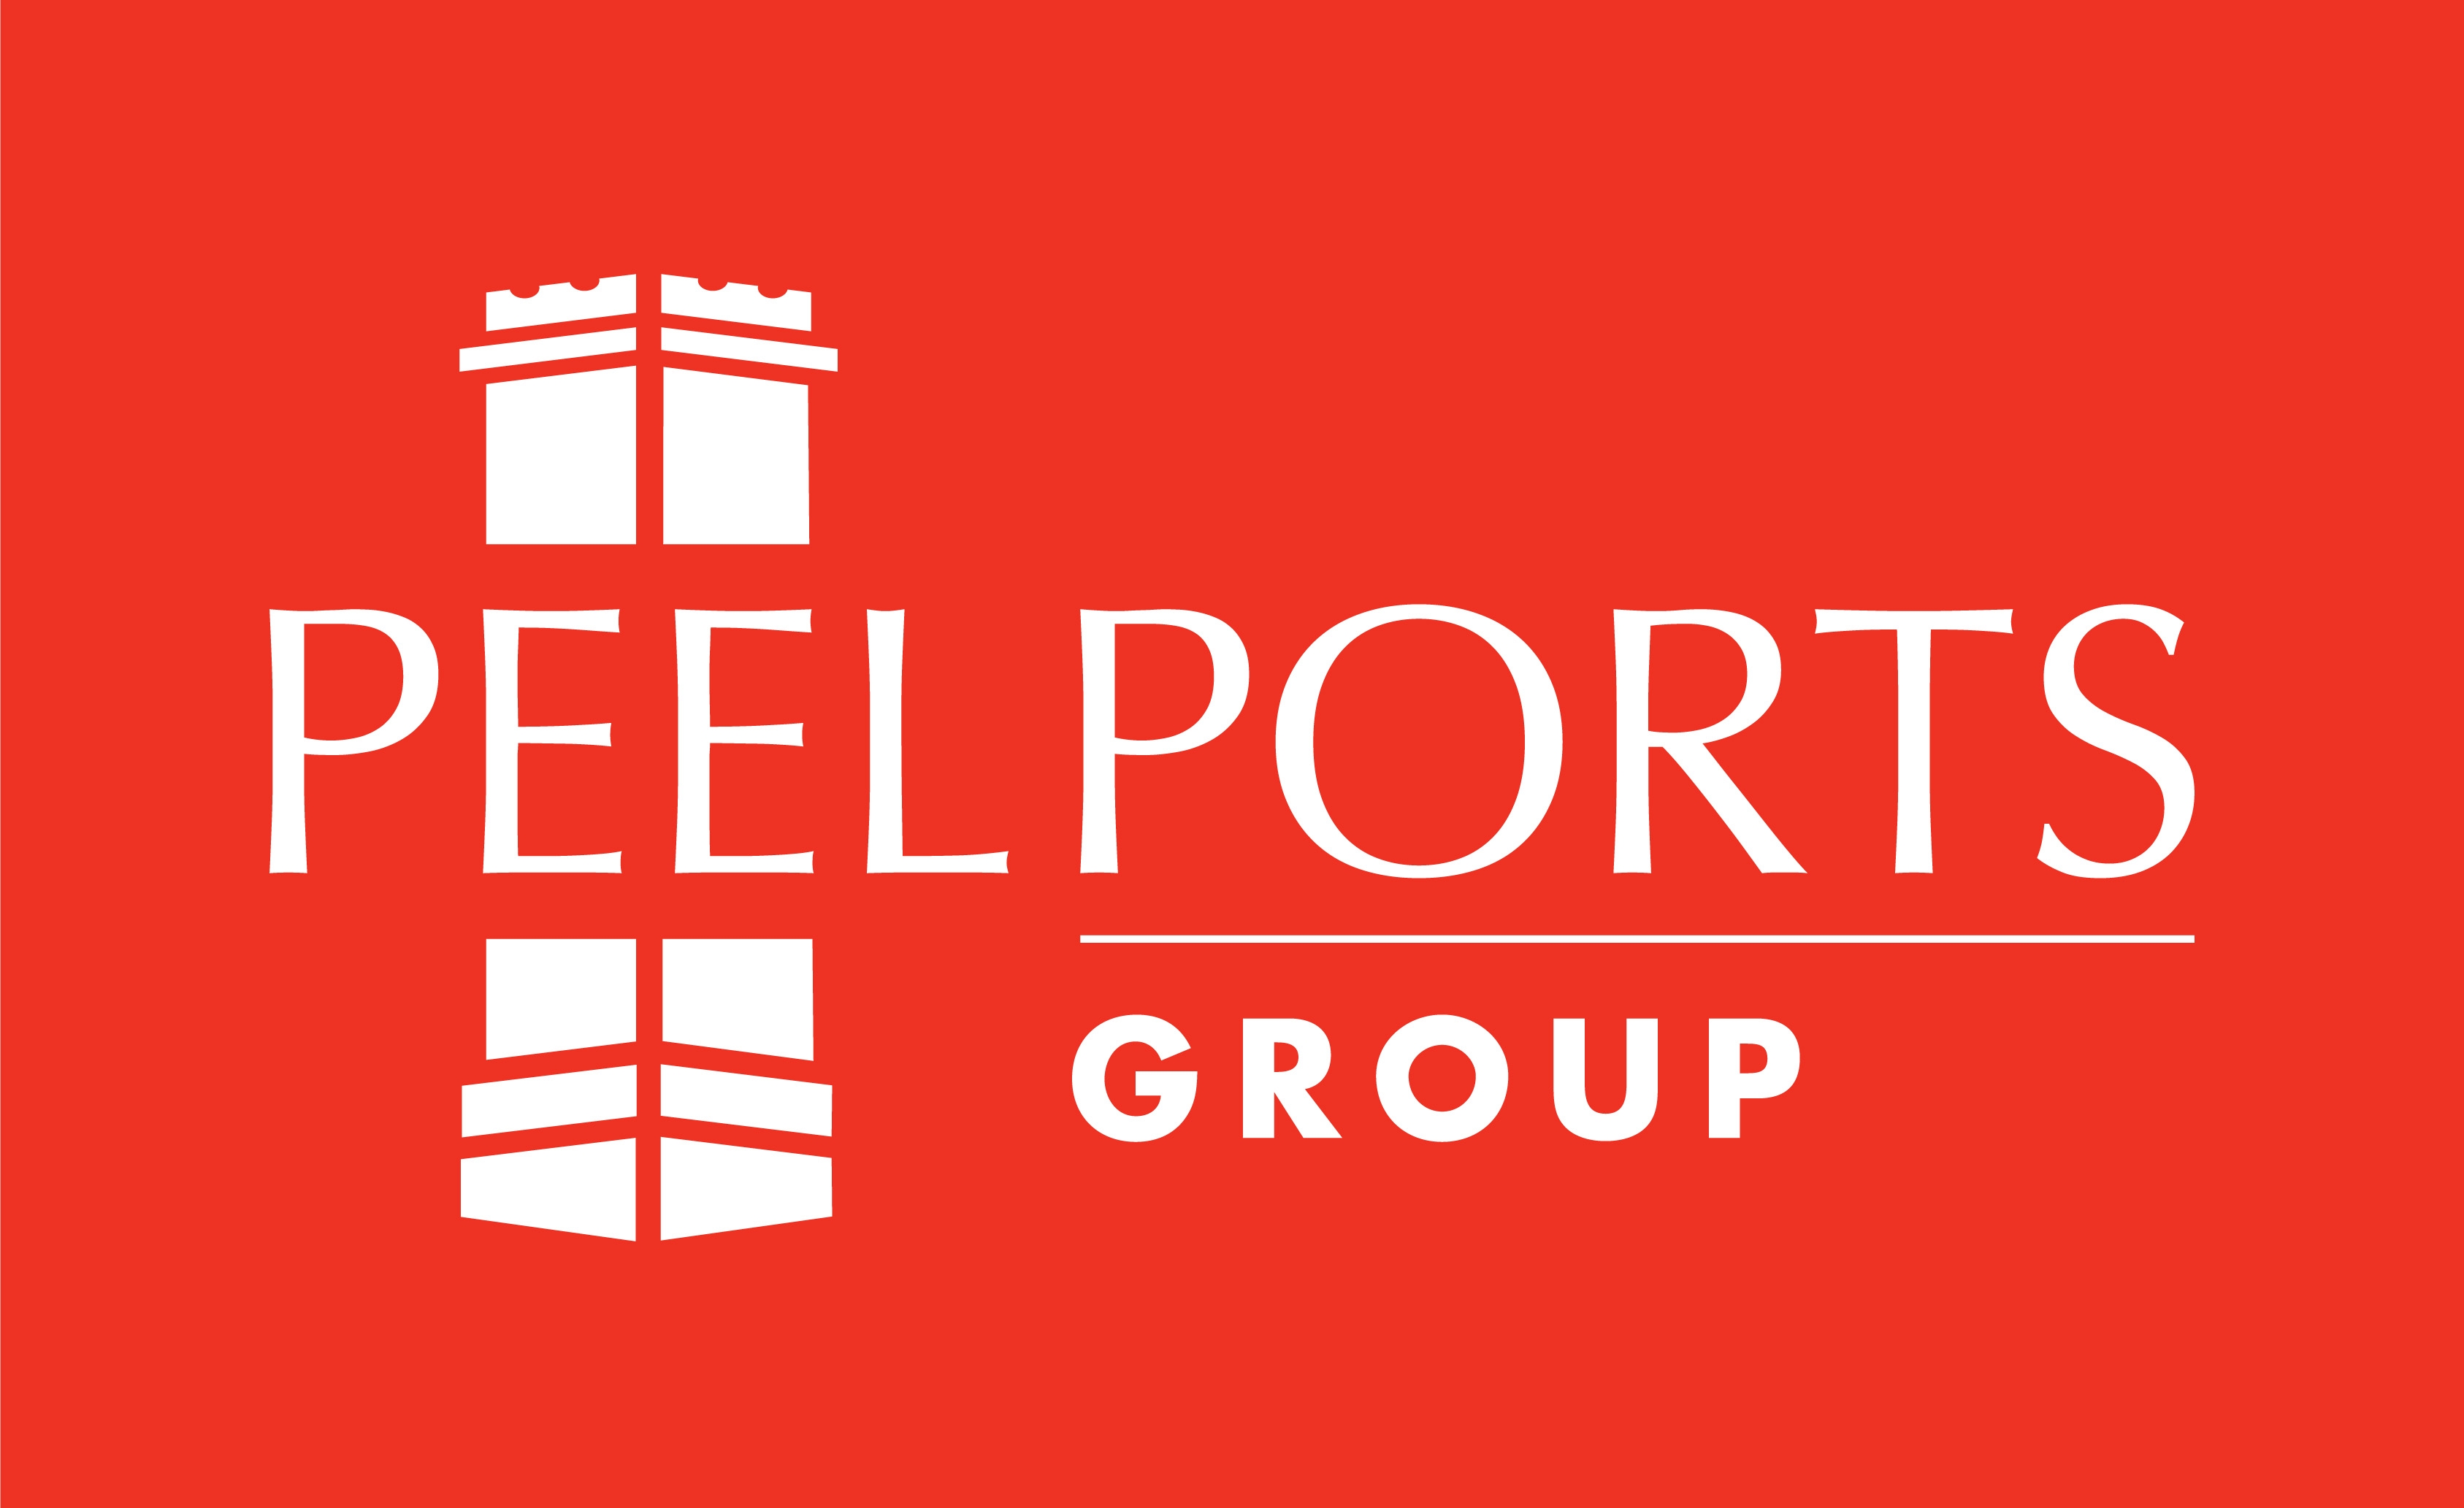 Peel Ports Group